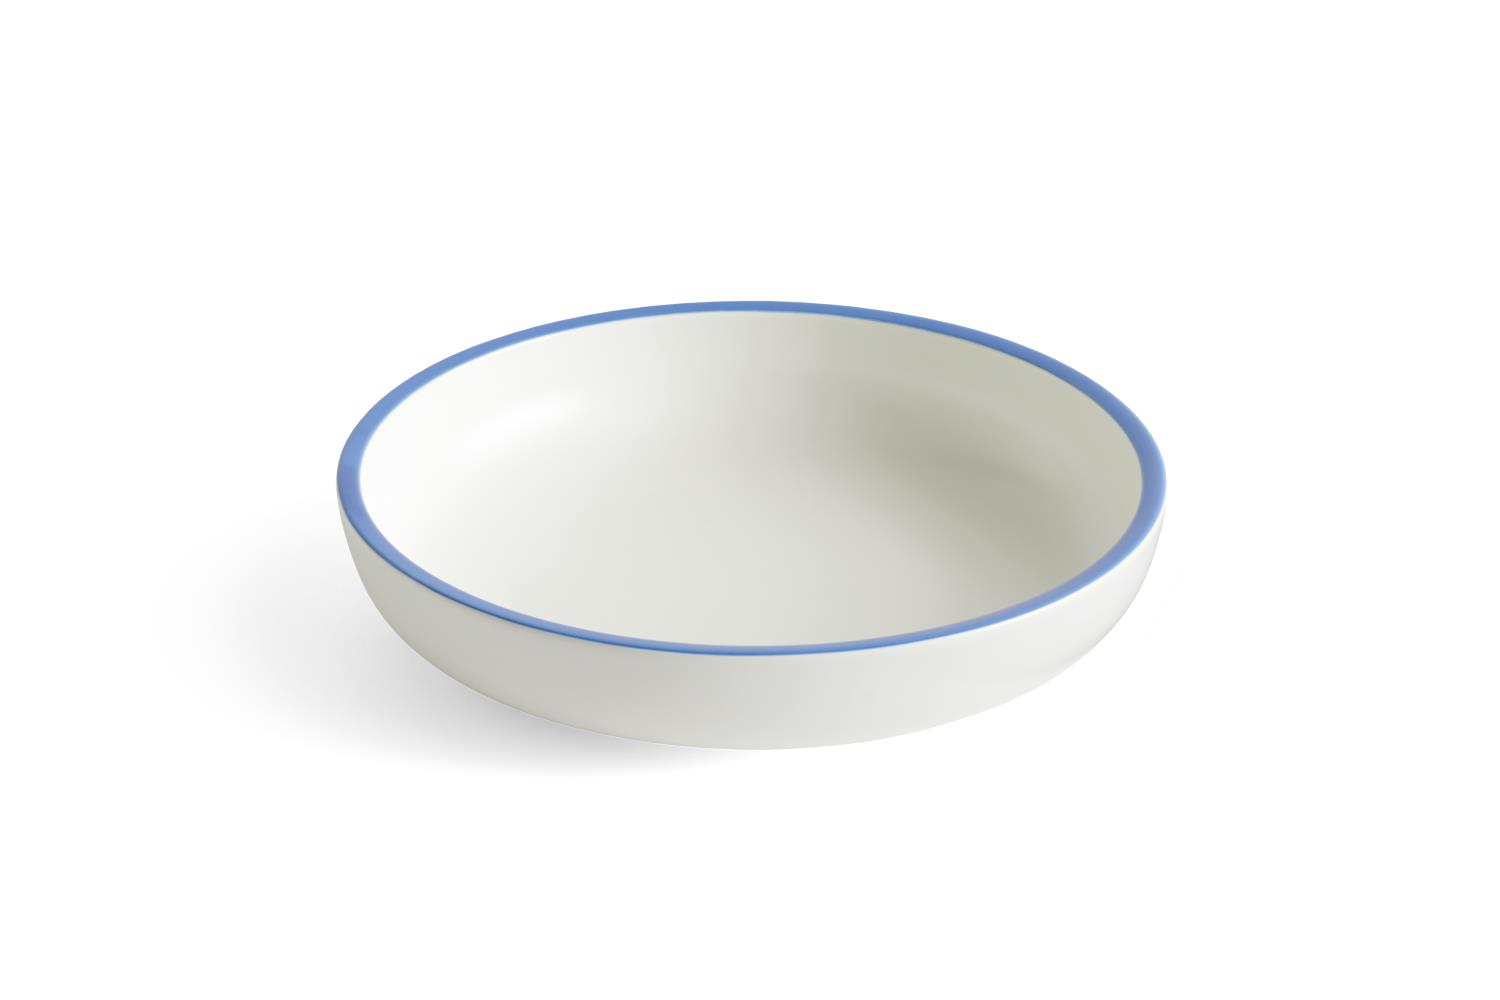 HAY - Sobremesa Serving Bowl - L - White with Blue Rim